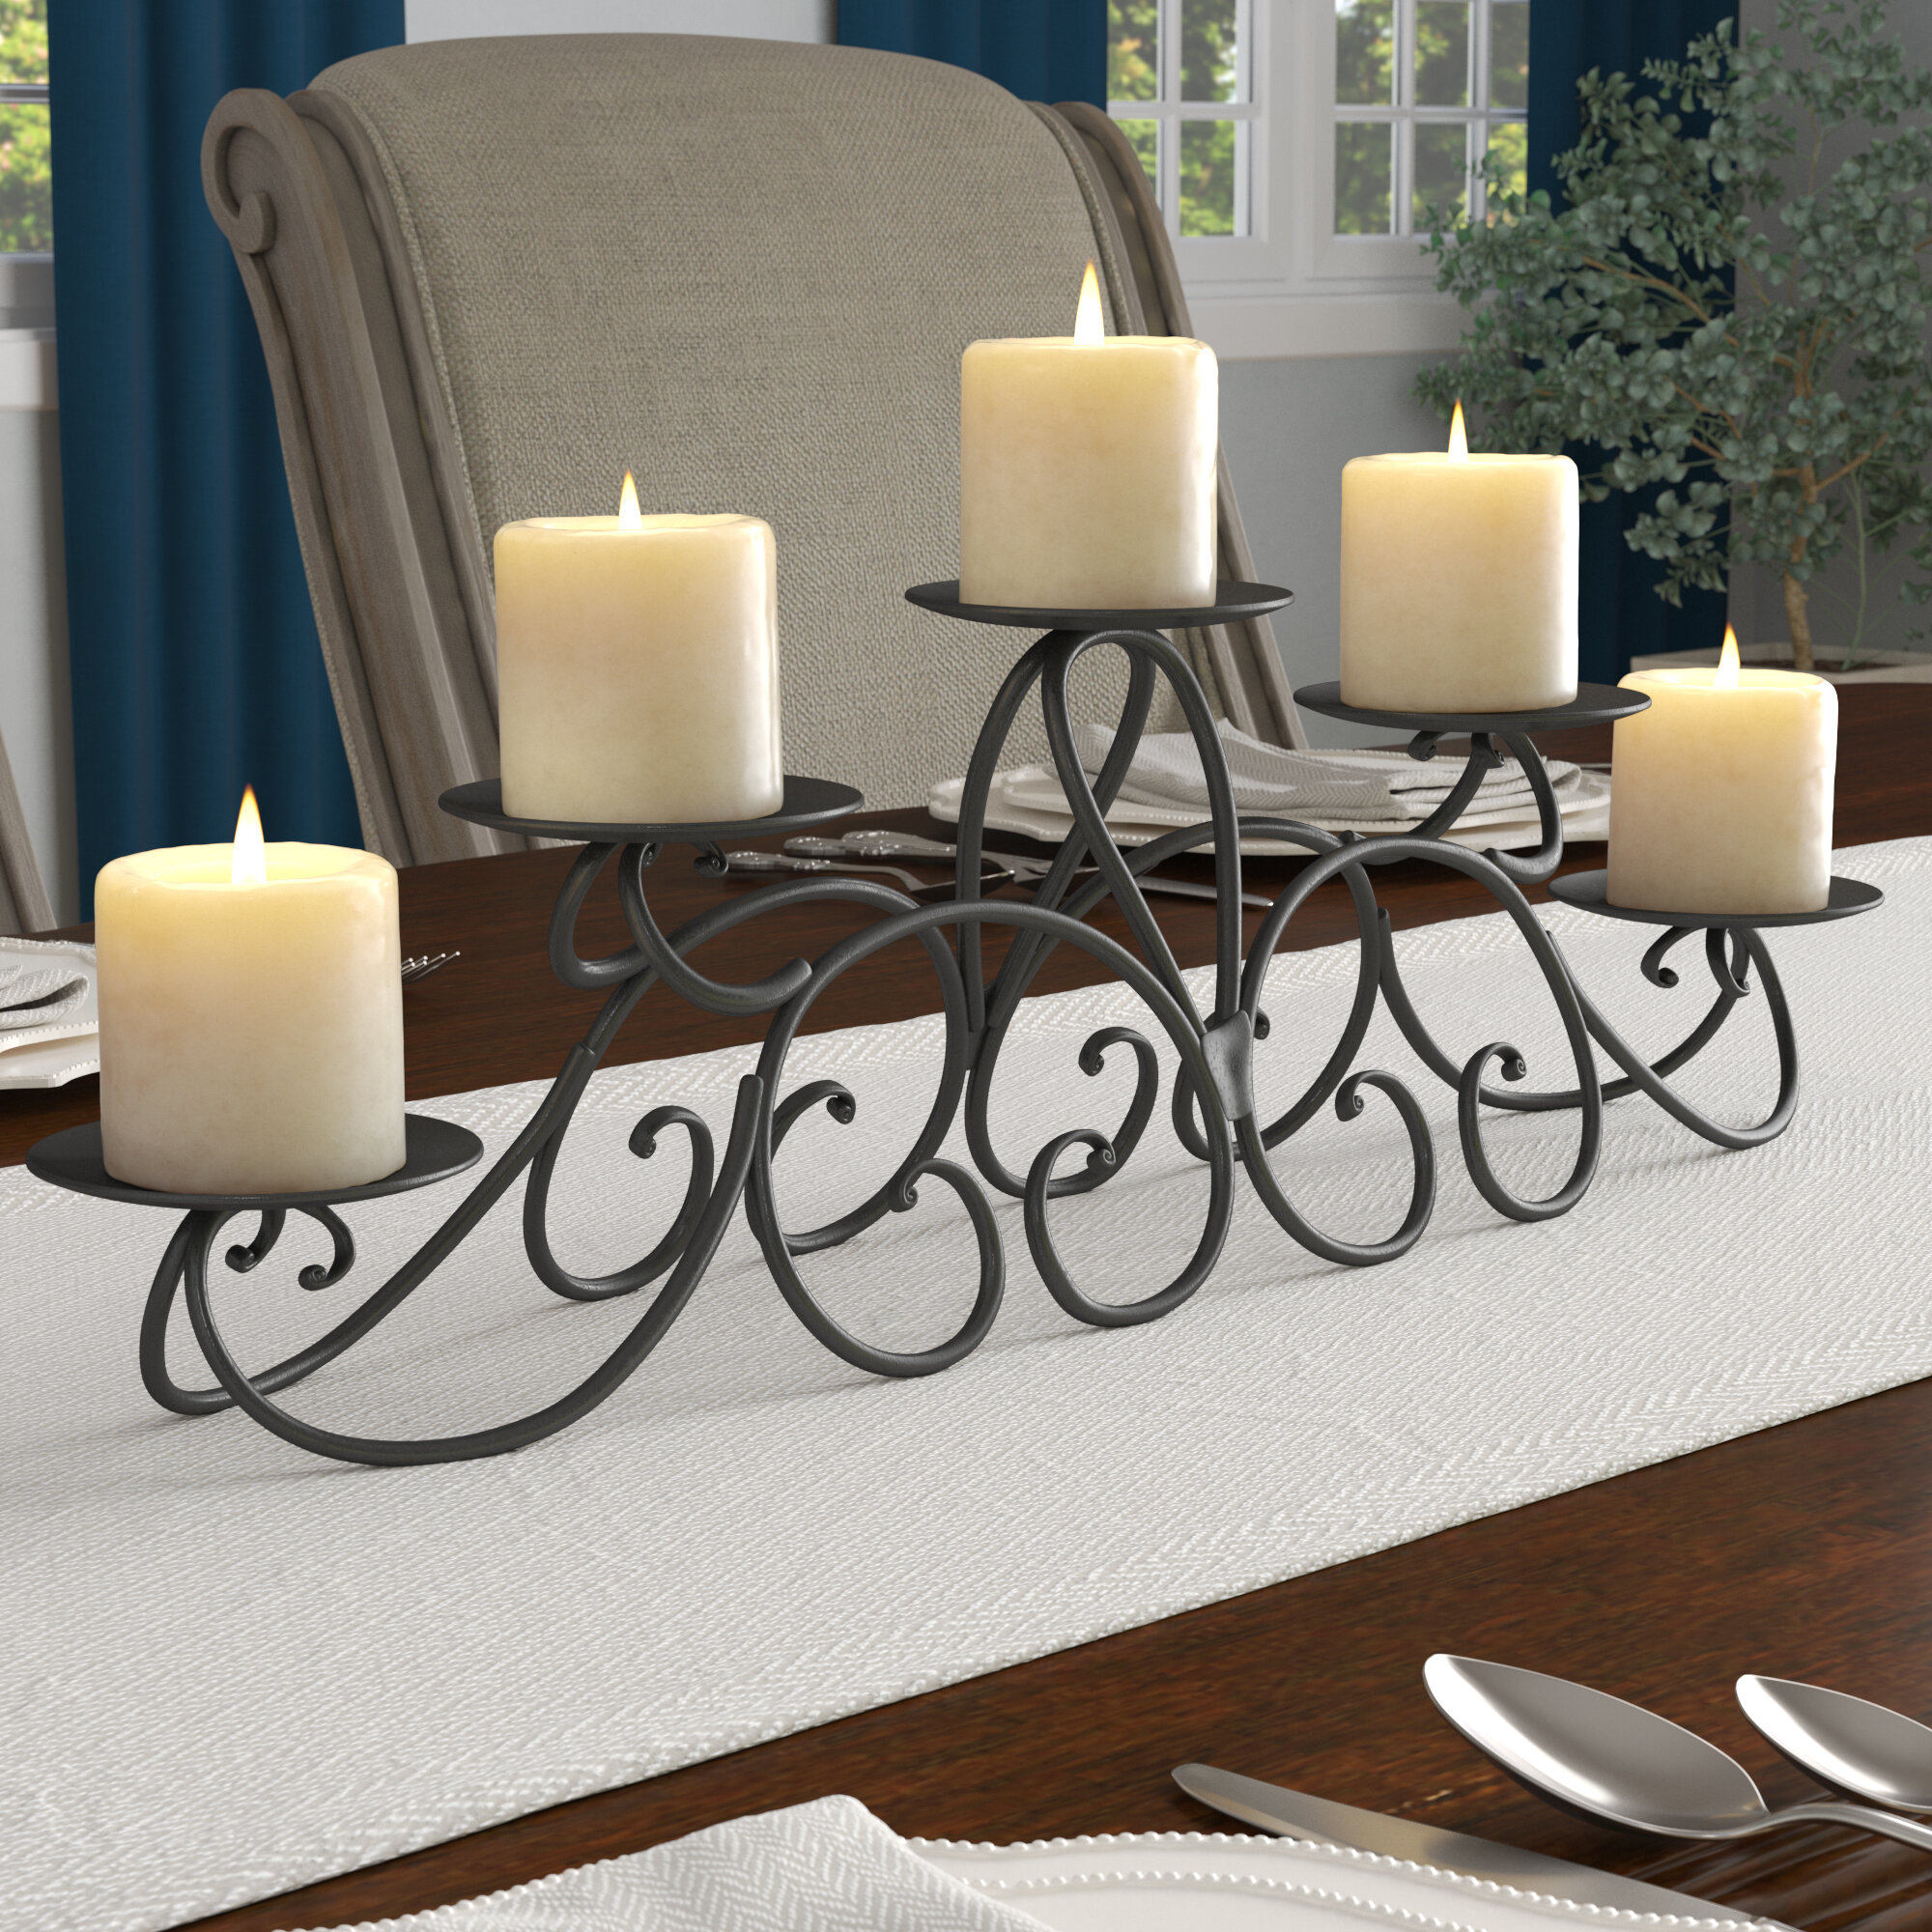 Woodeze Home Indoor Centerpiece Wedding Decorative Gift Gothic Style Fireplace Candelabra